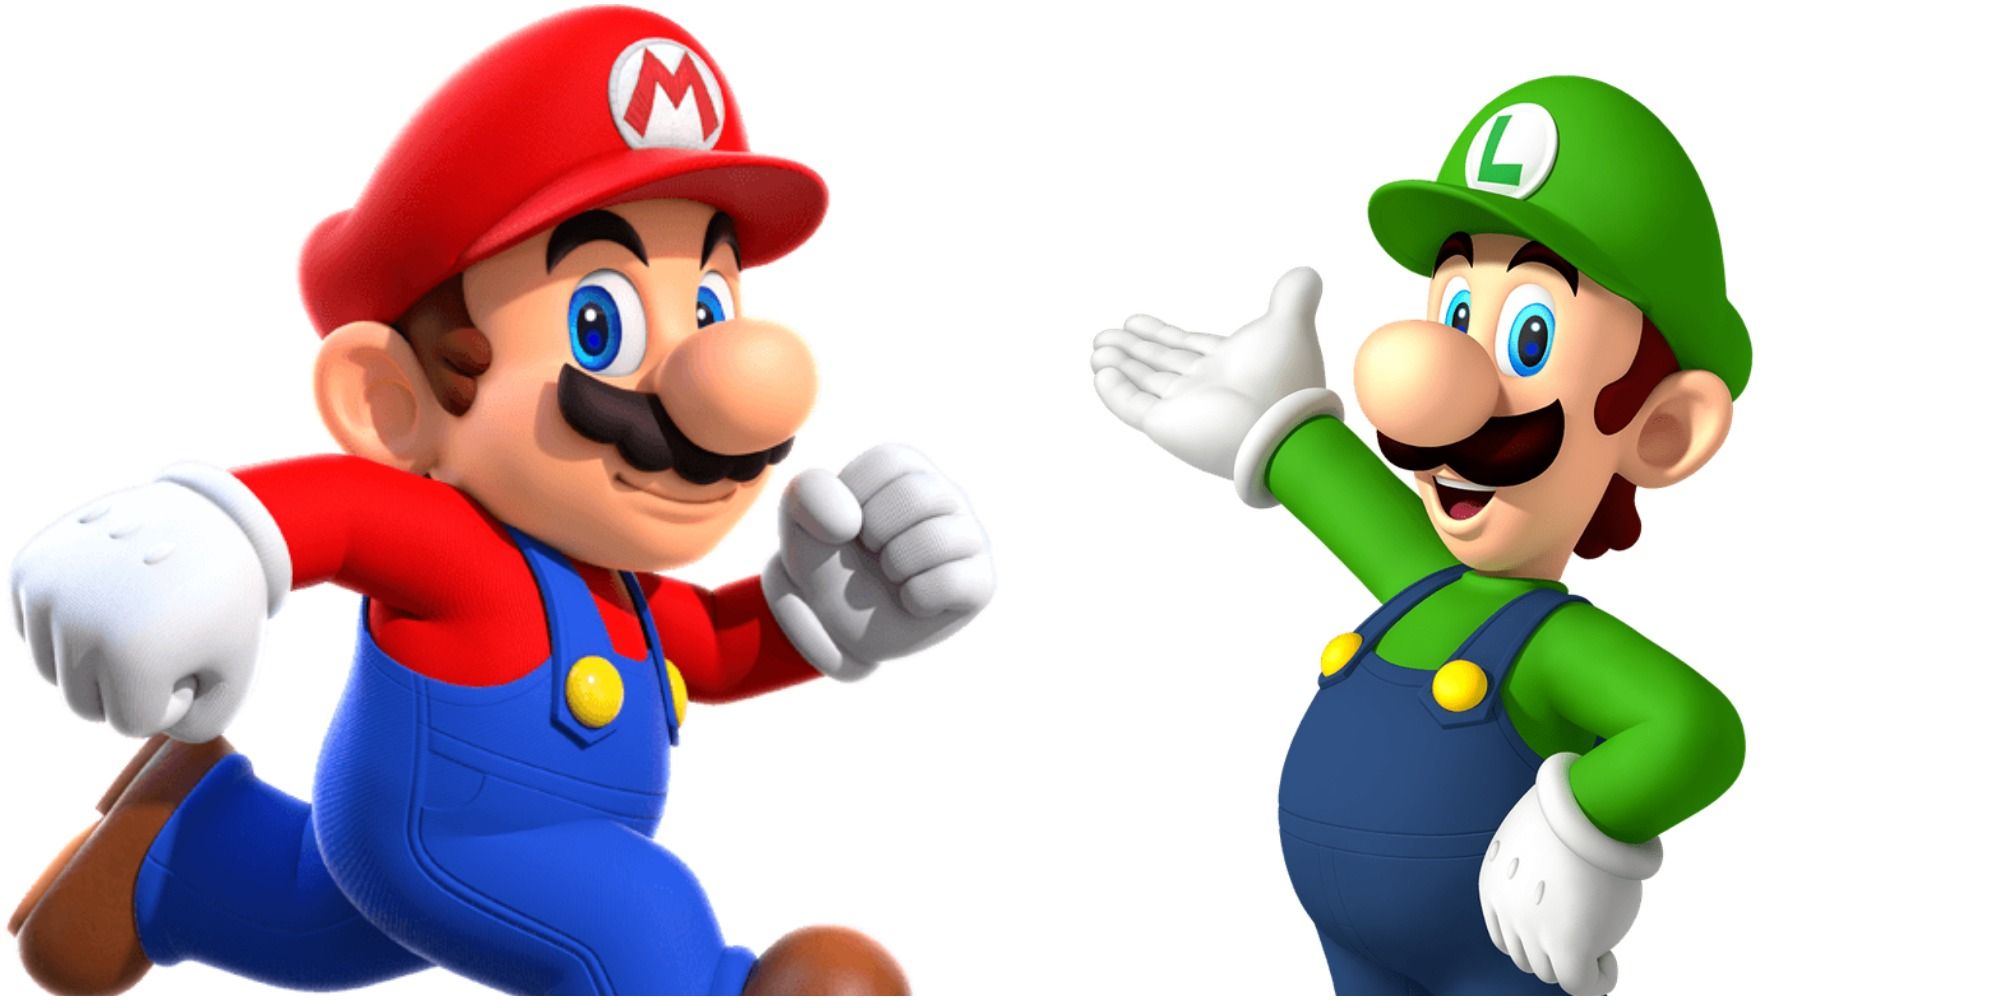 Super Mario Brothers Mario and Luigi's friendly sibling rivalry